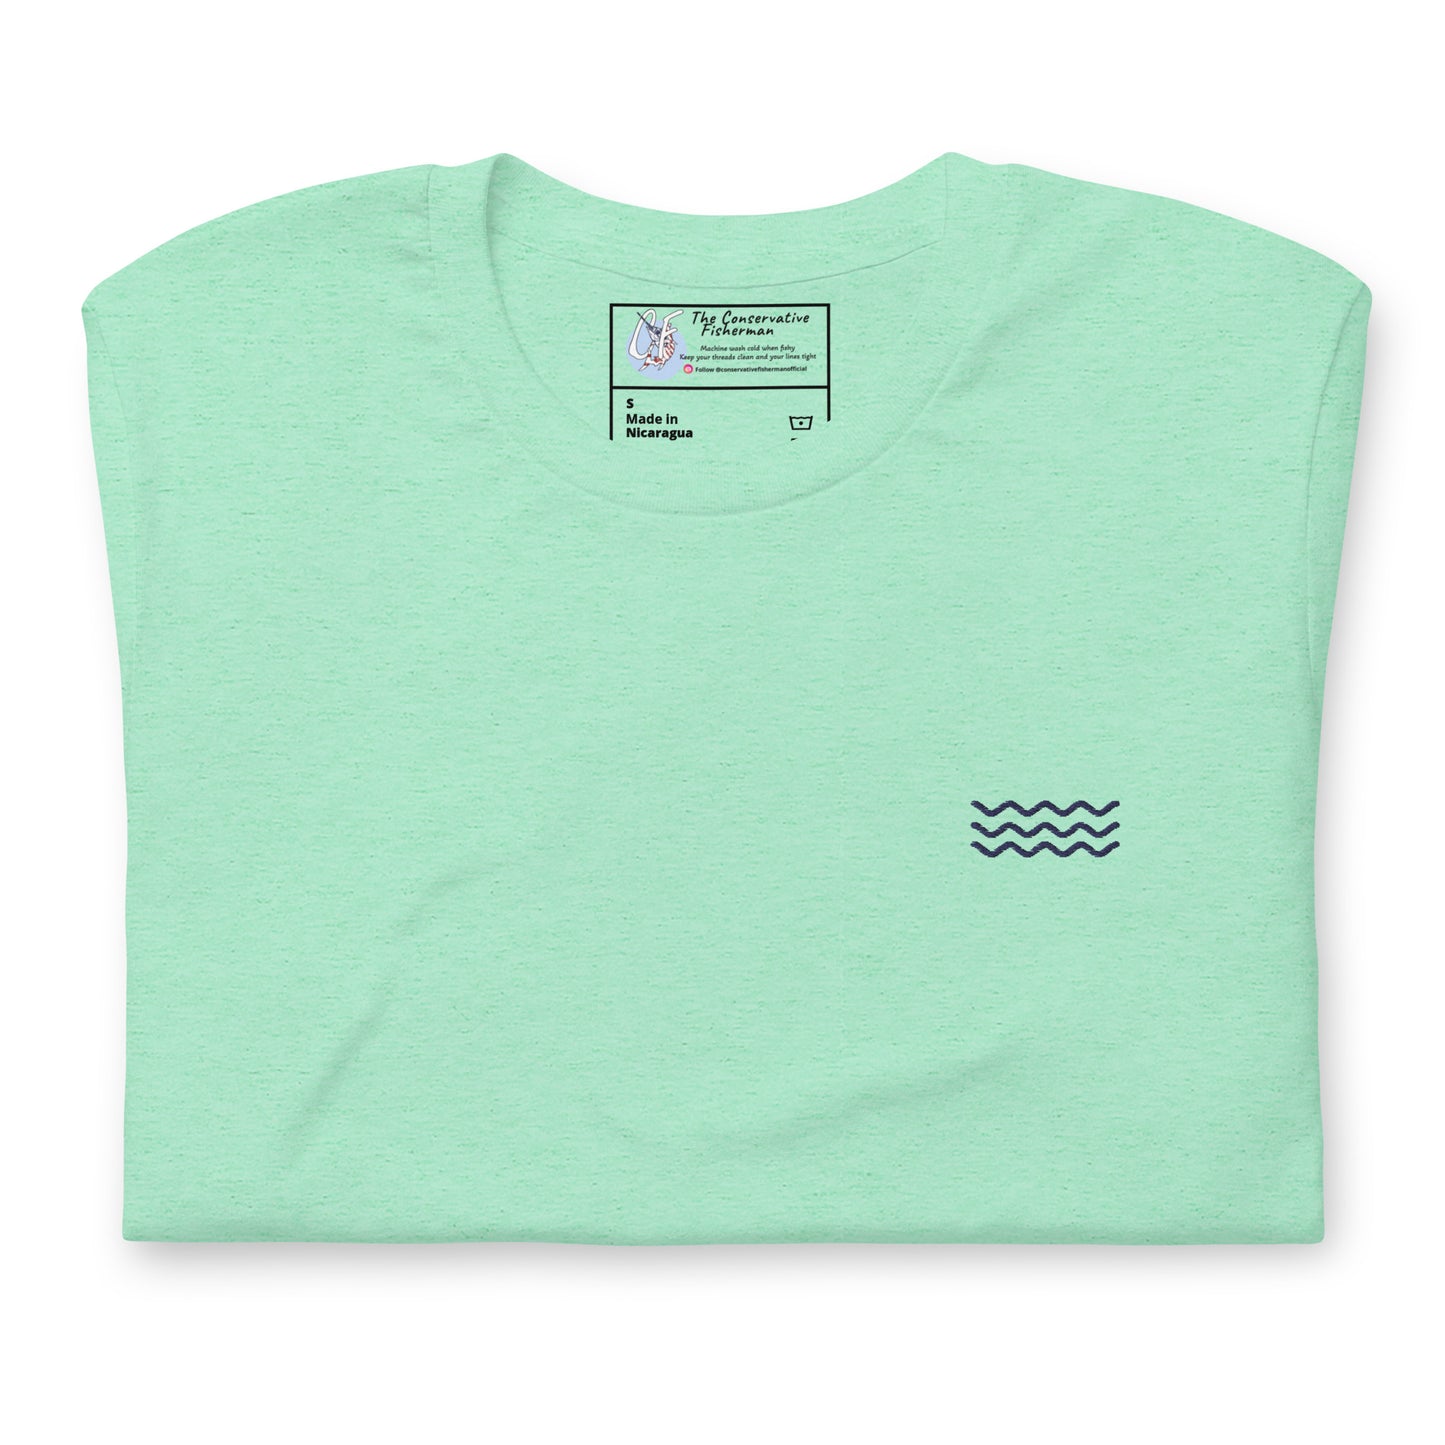 'Ocean Waves' Premium Embroidered Shirt